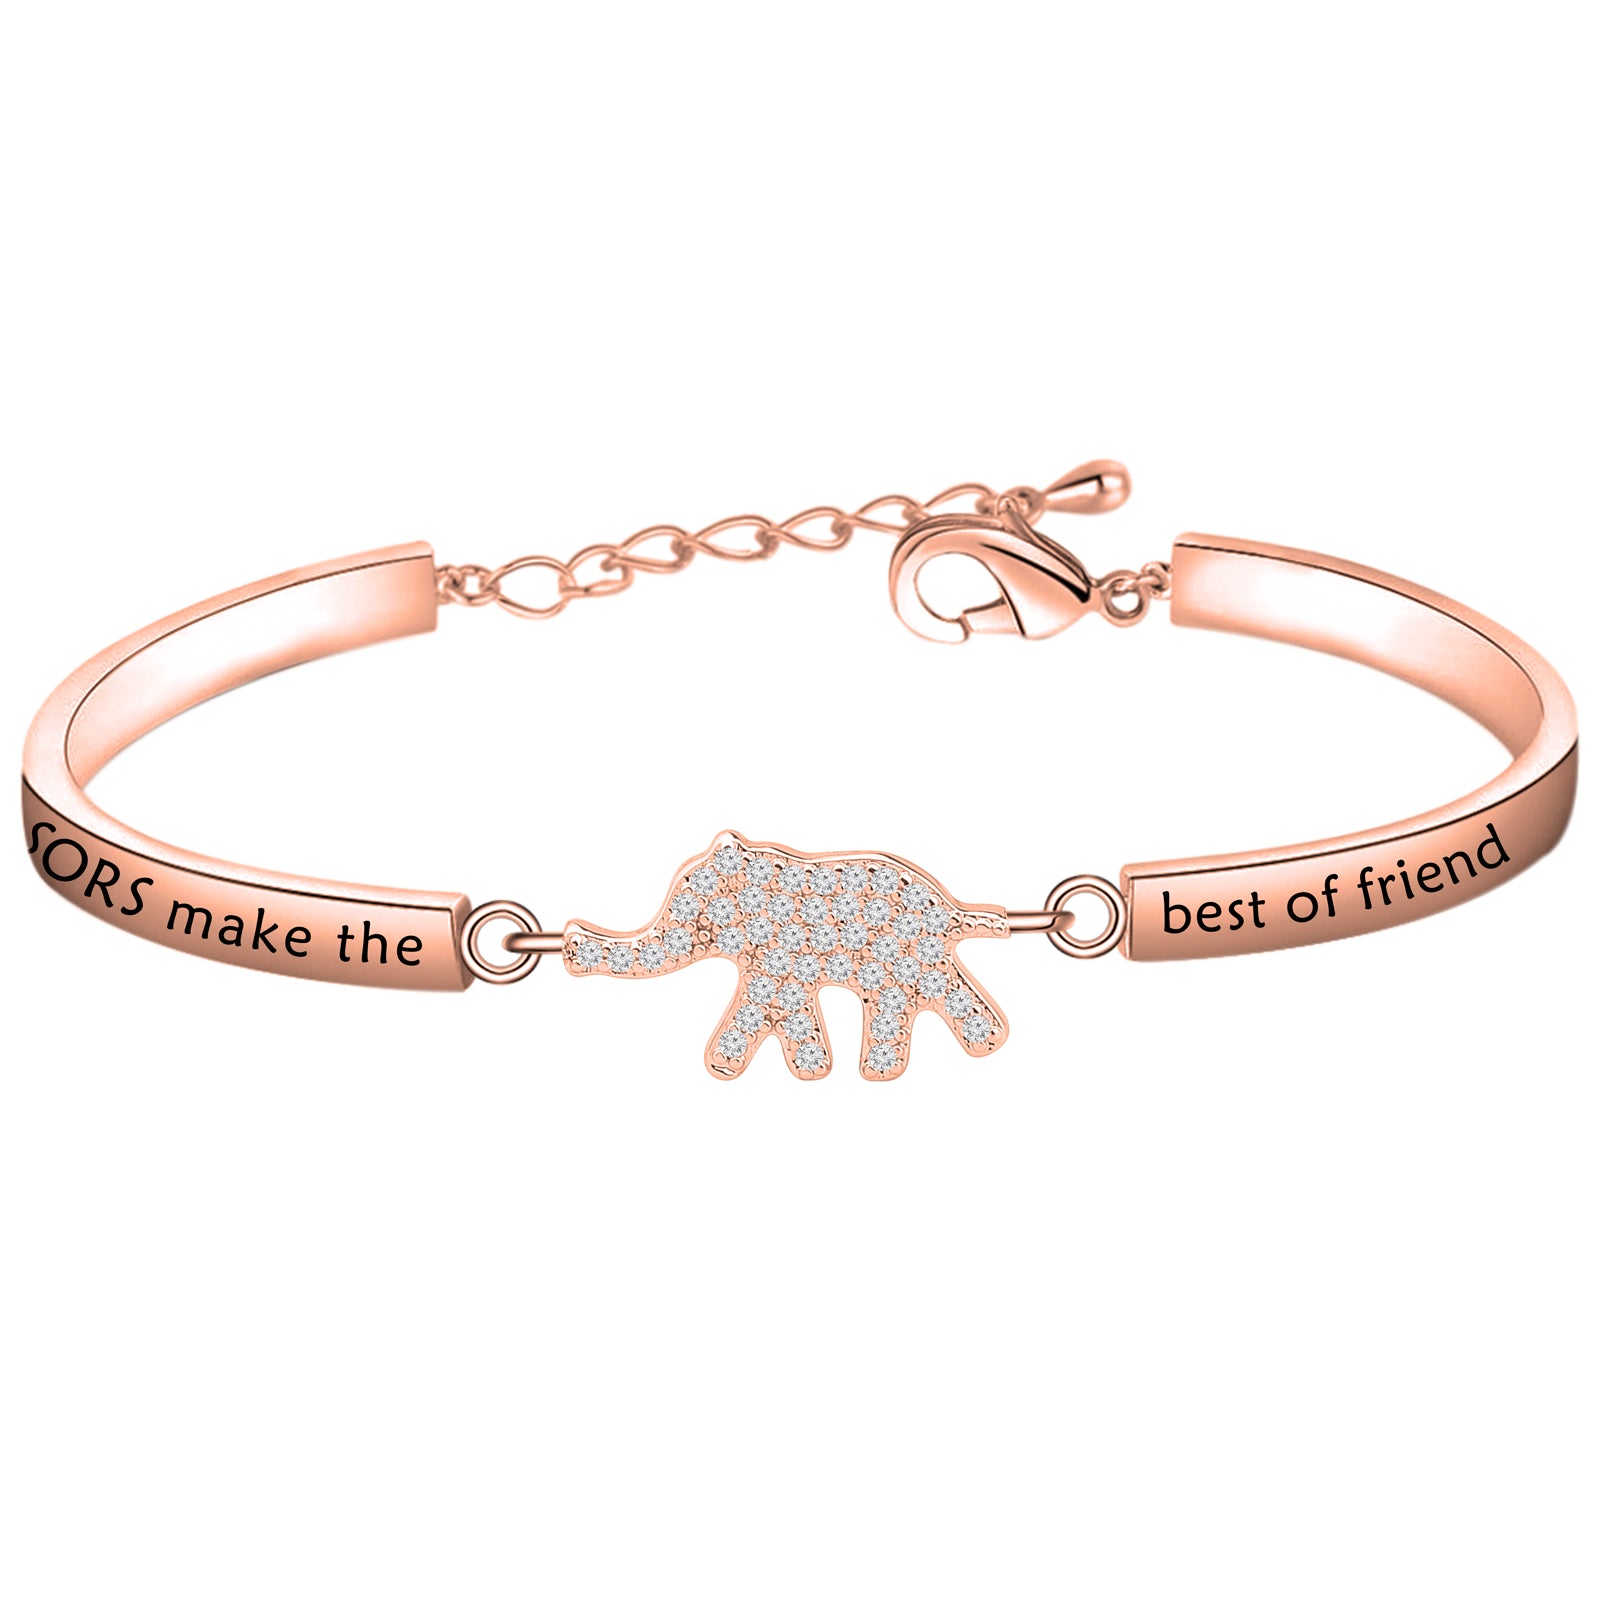 MYOSPARK Sorority Sister Jewelry Sisterhood Elephant Bracelet SORORS Make the Best of Friend Gift for Her Greek Sorority Gift